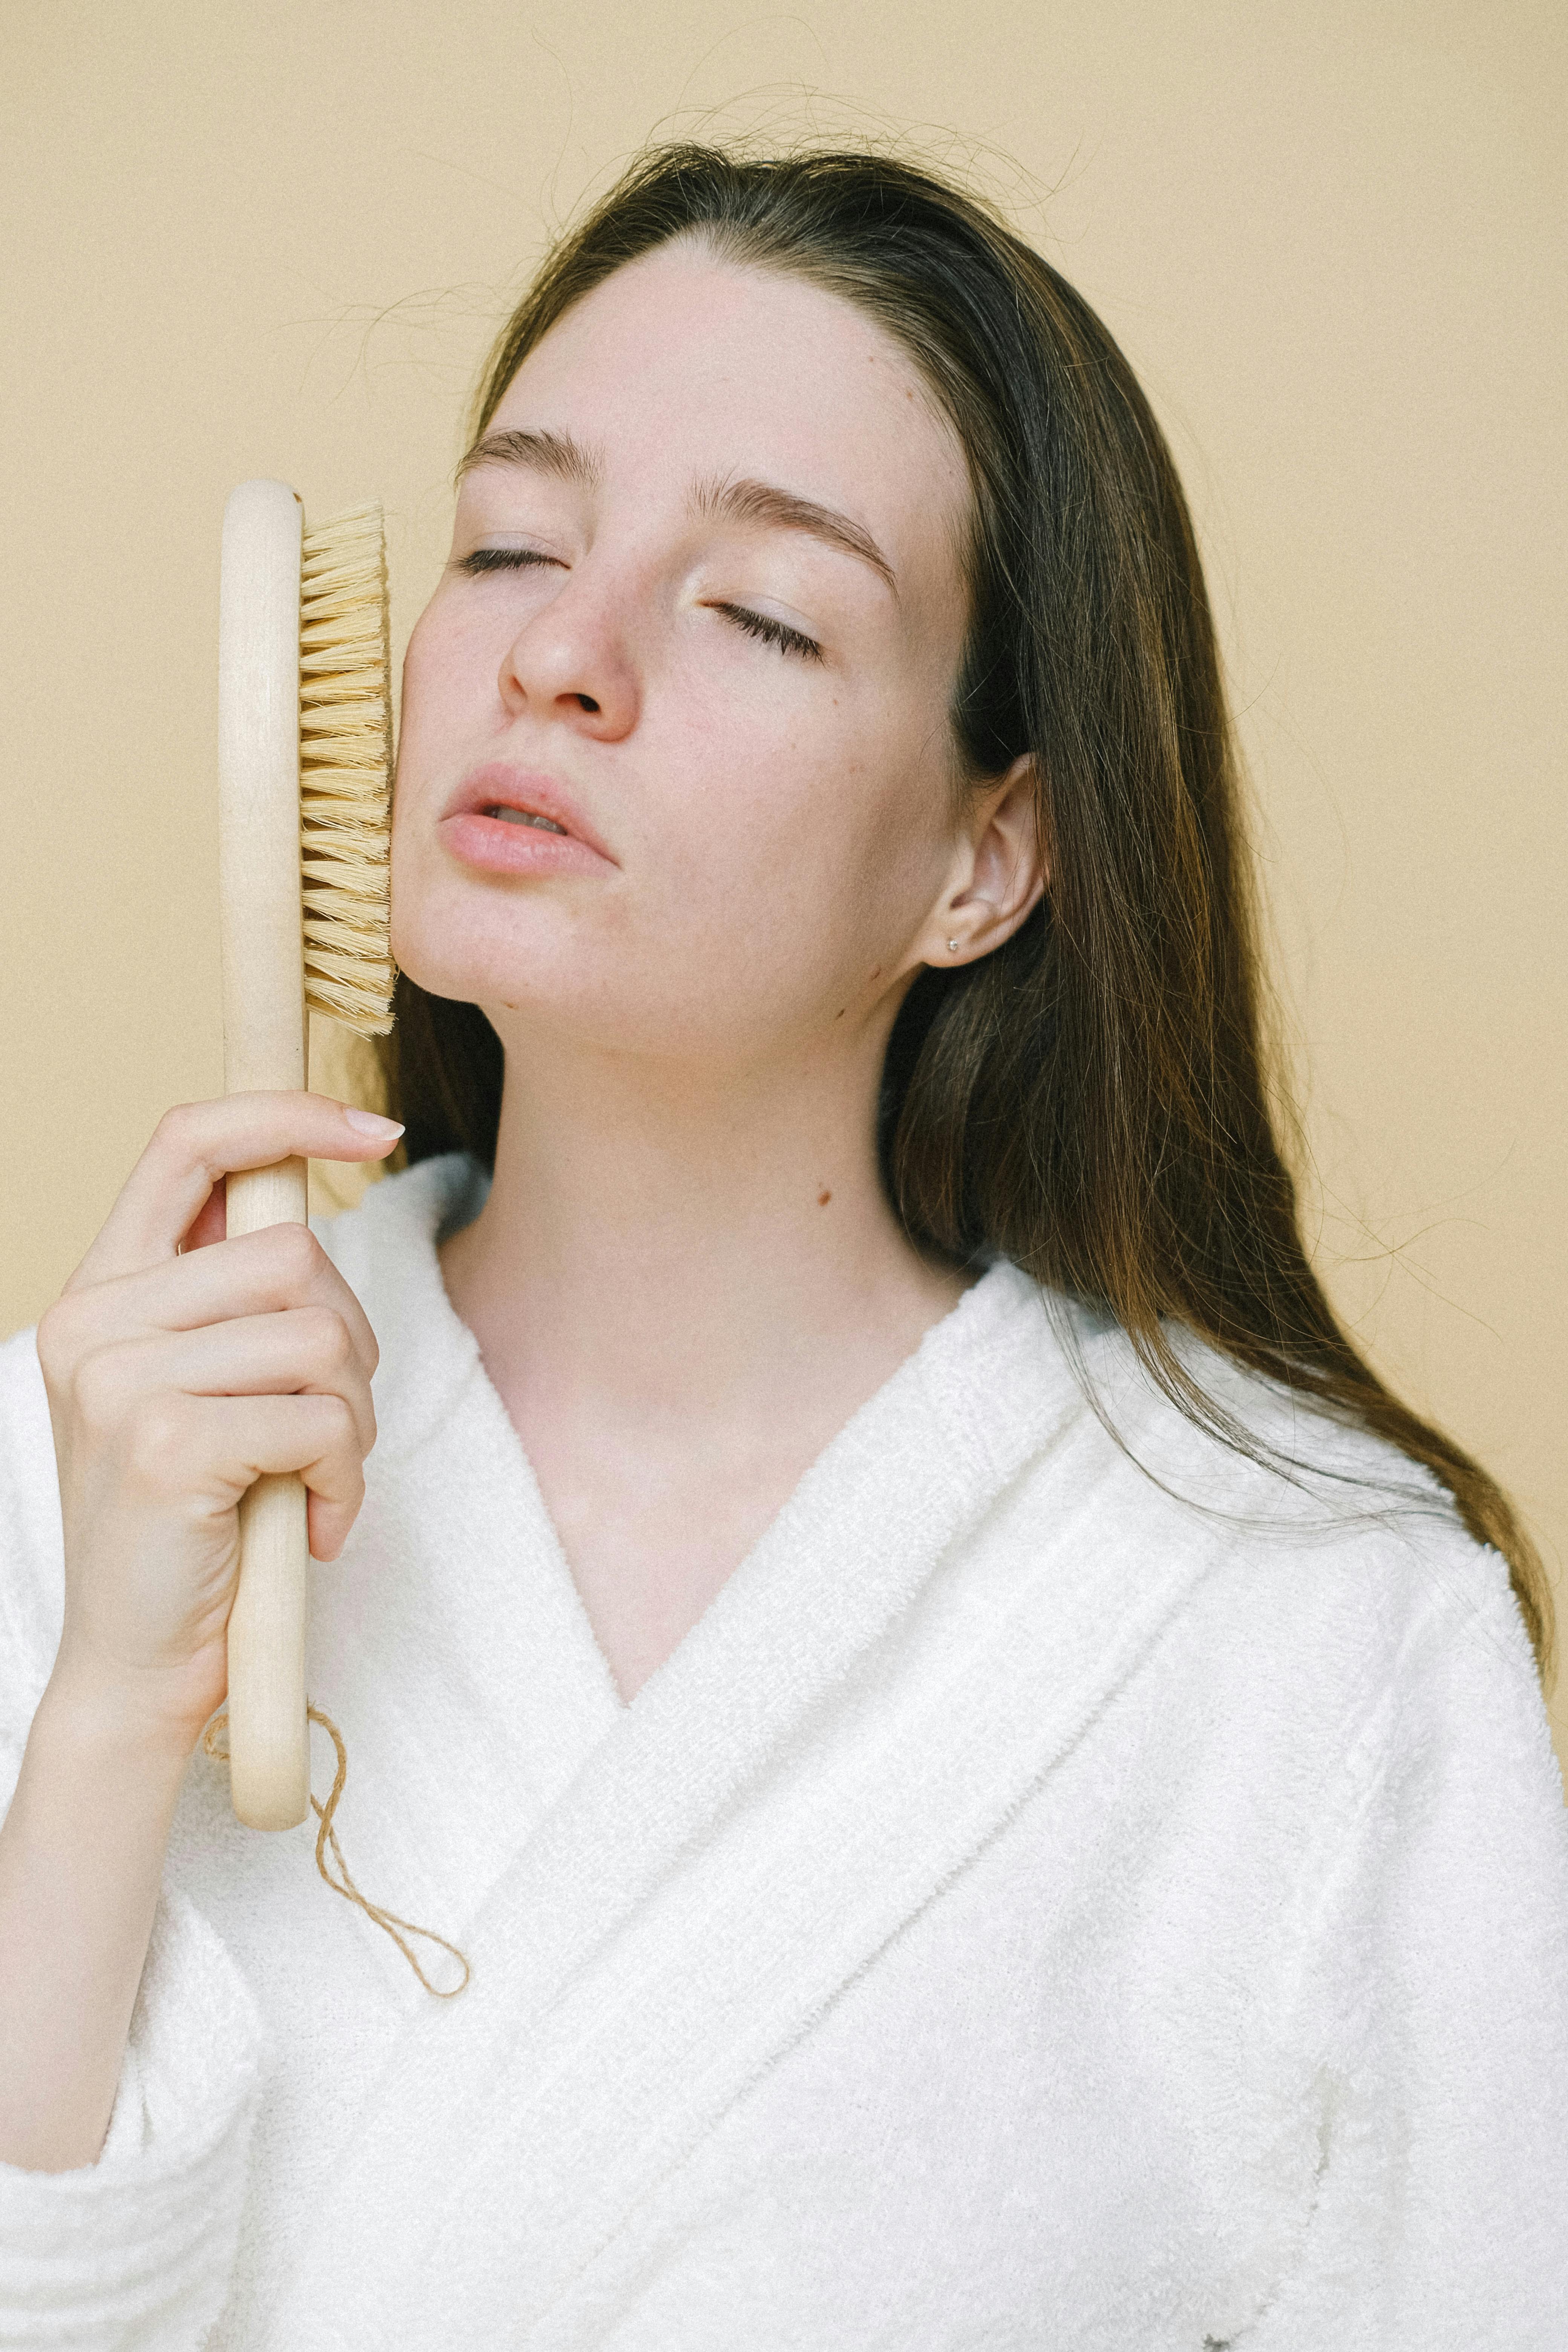 female brushing face with brush for dry massage